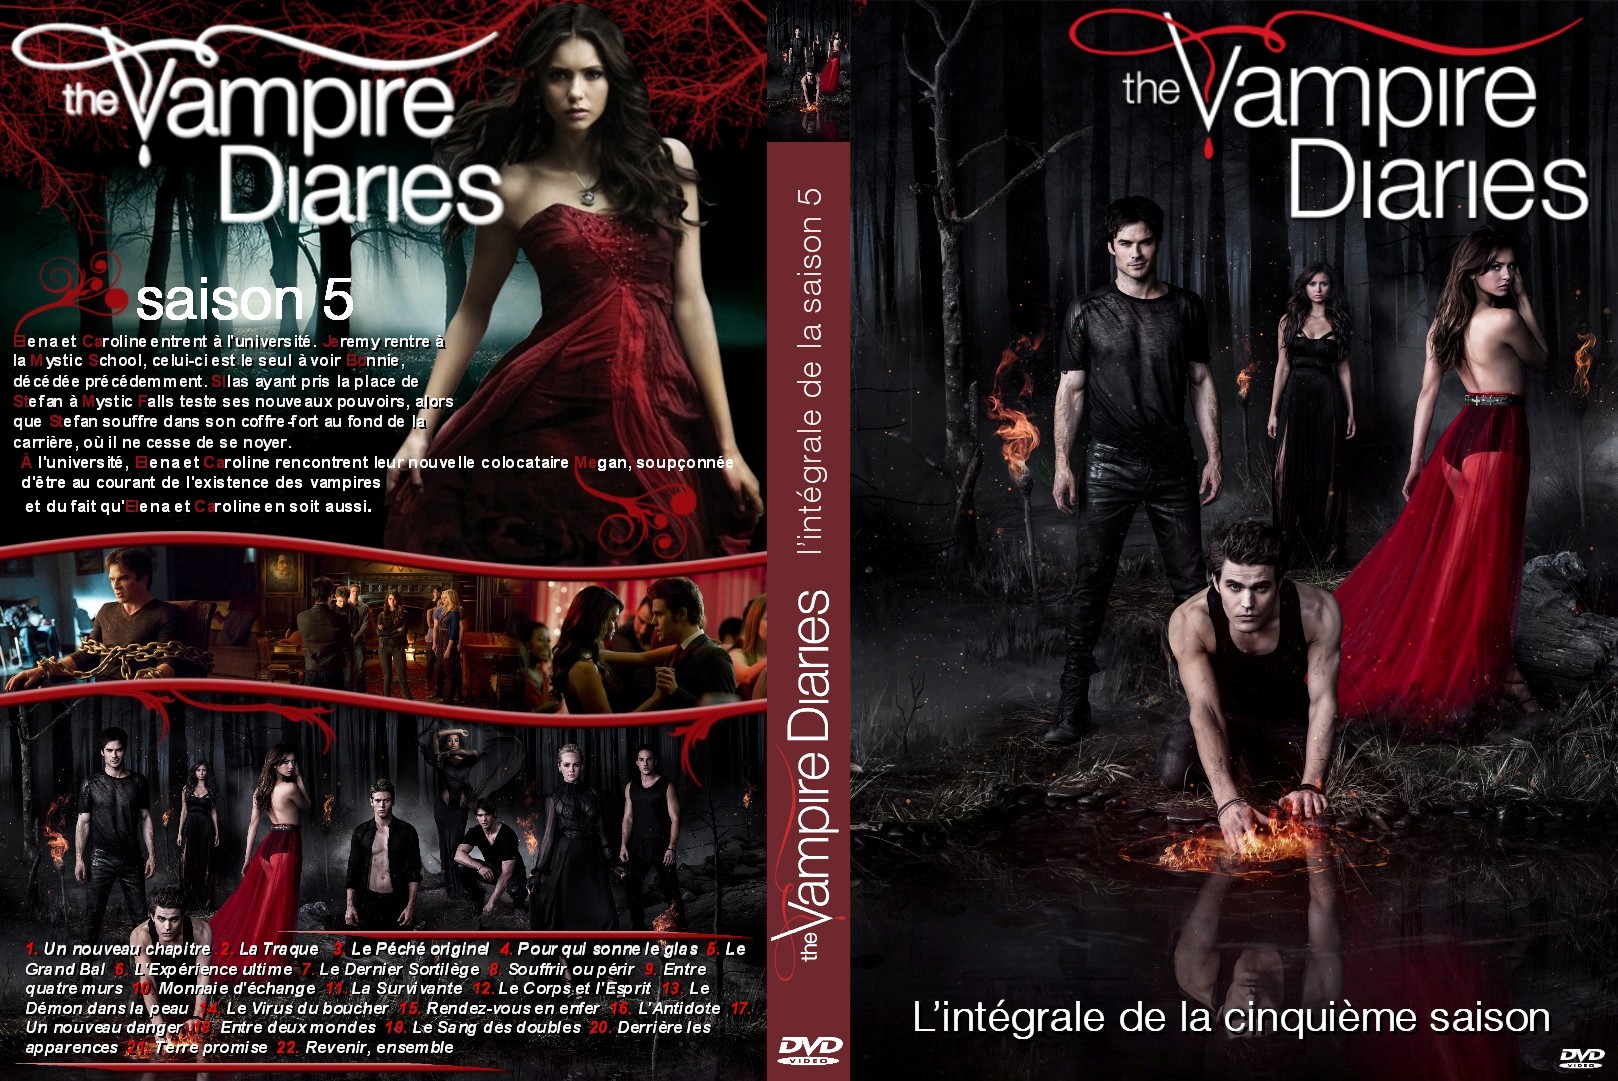 Jaquette DVD The vampire diaries Saison 5 custom